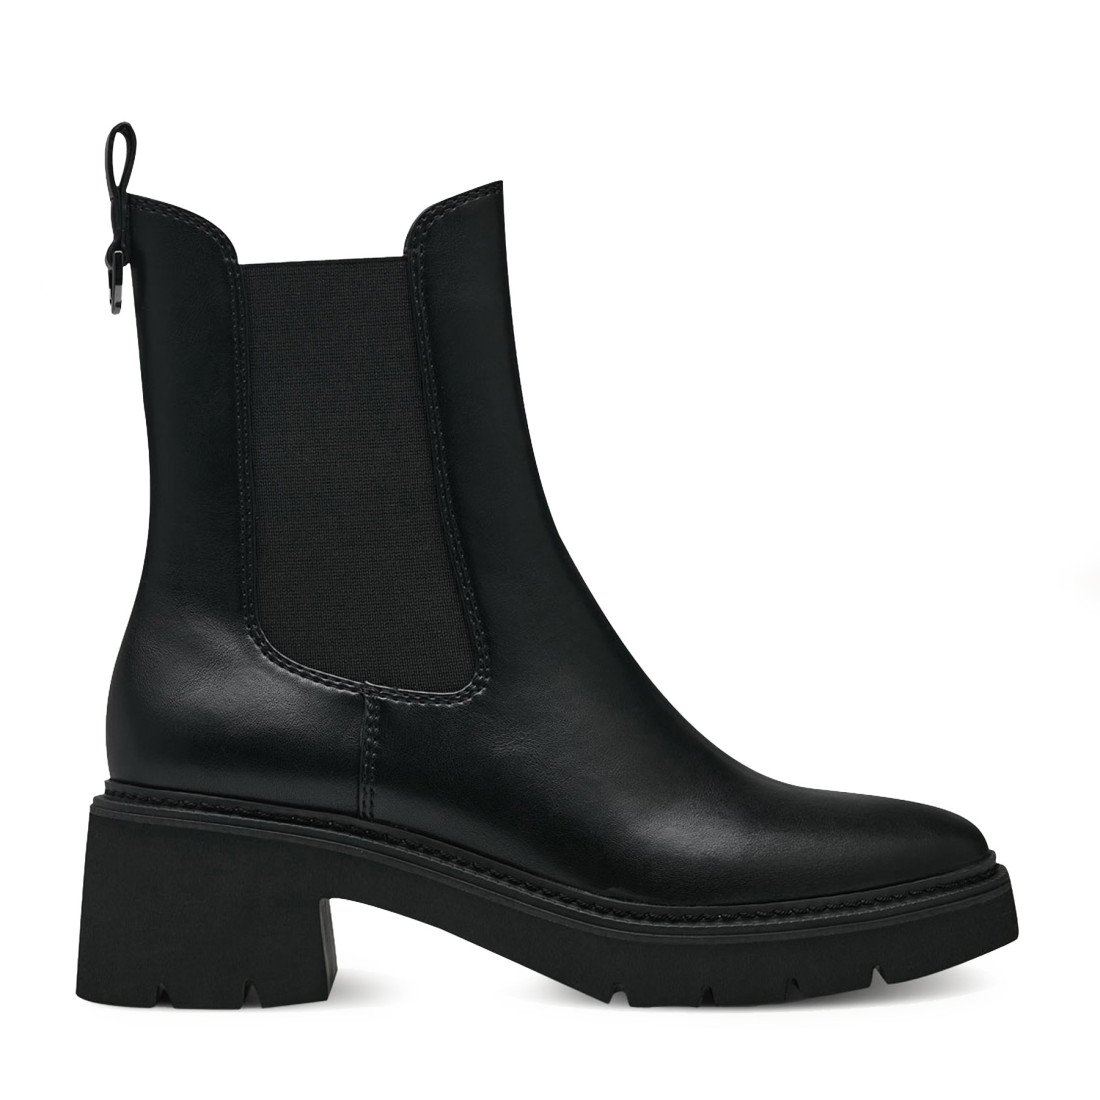 Tamaris black faux leather Chelsea boot with medium heel